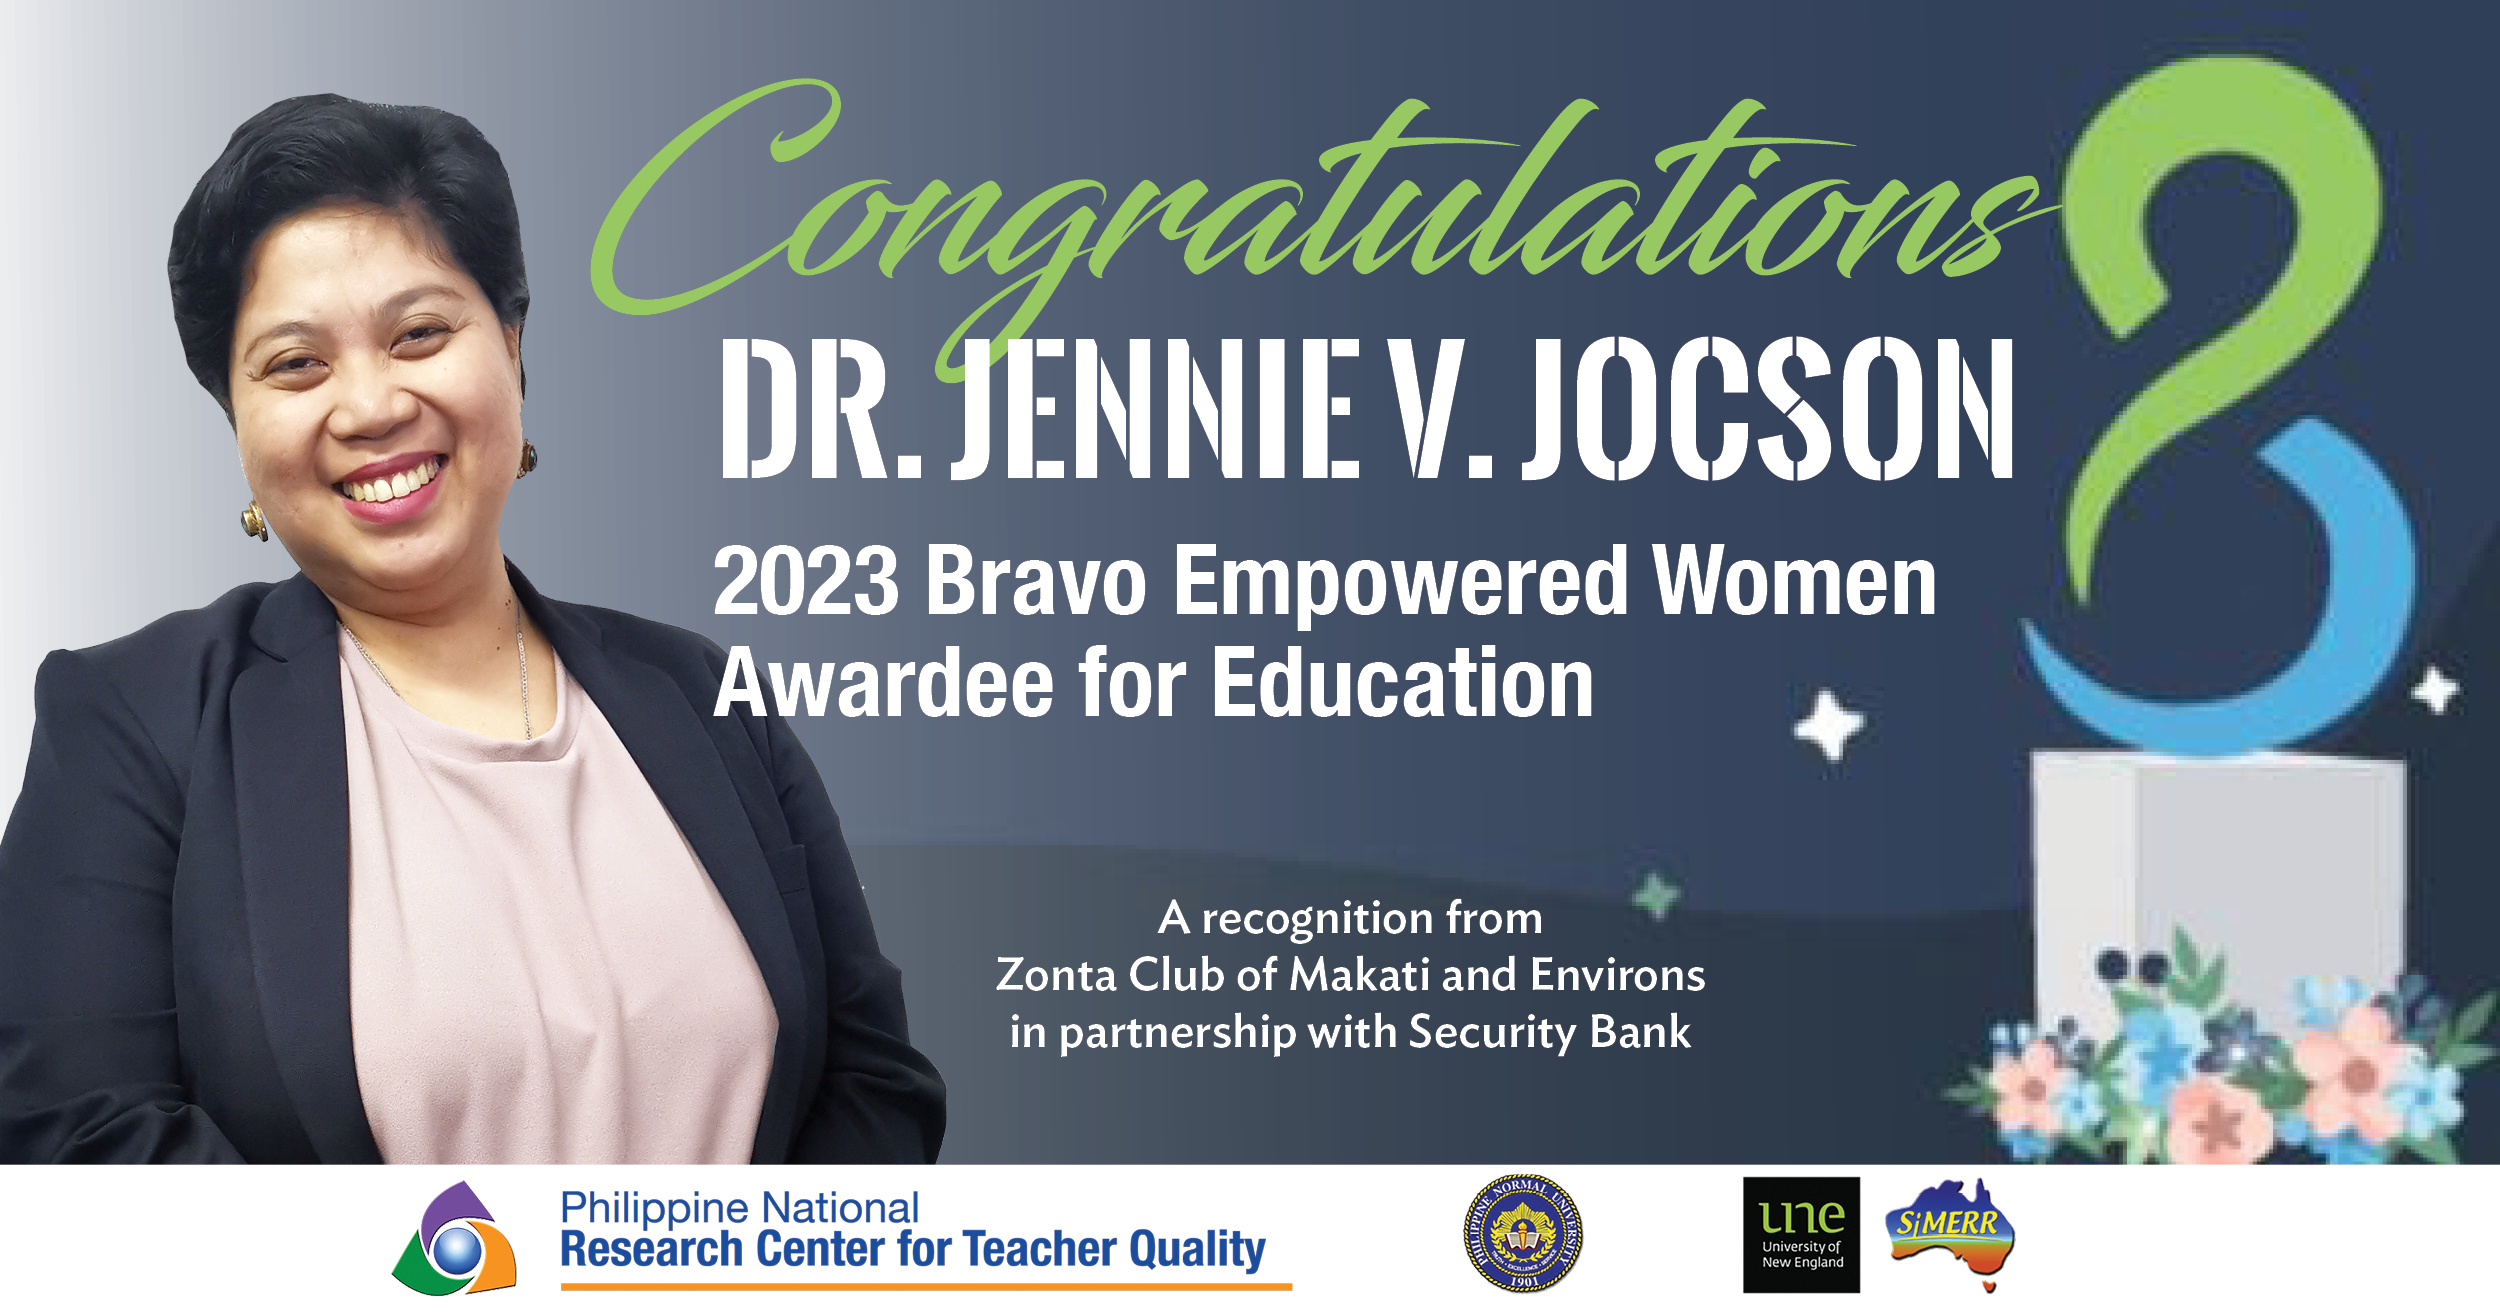 VP Jocson receives 2023 Bravo Empowered Women Award for Education